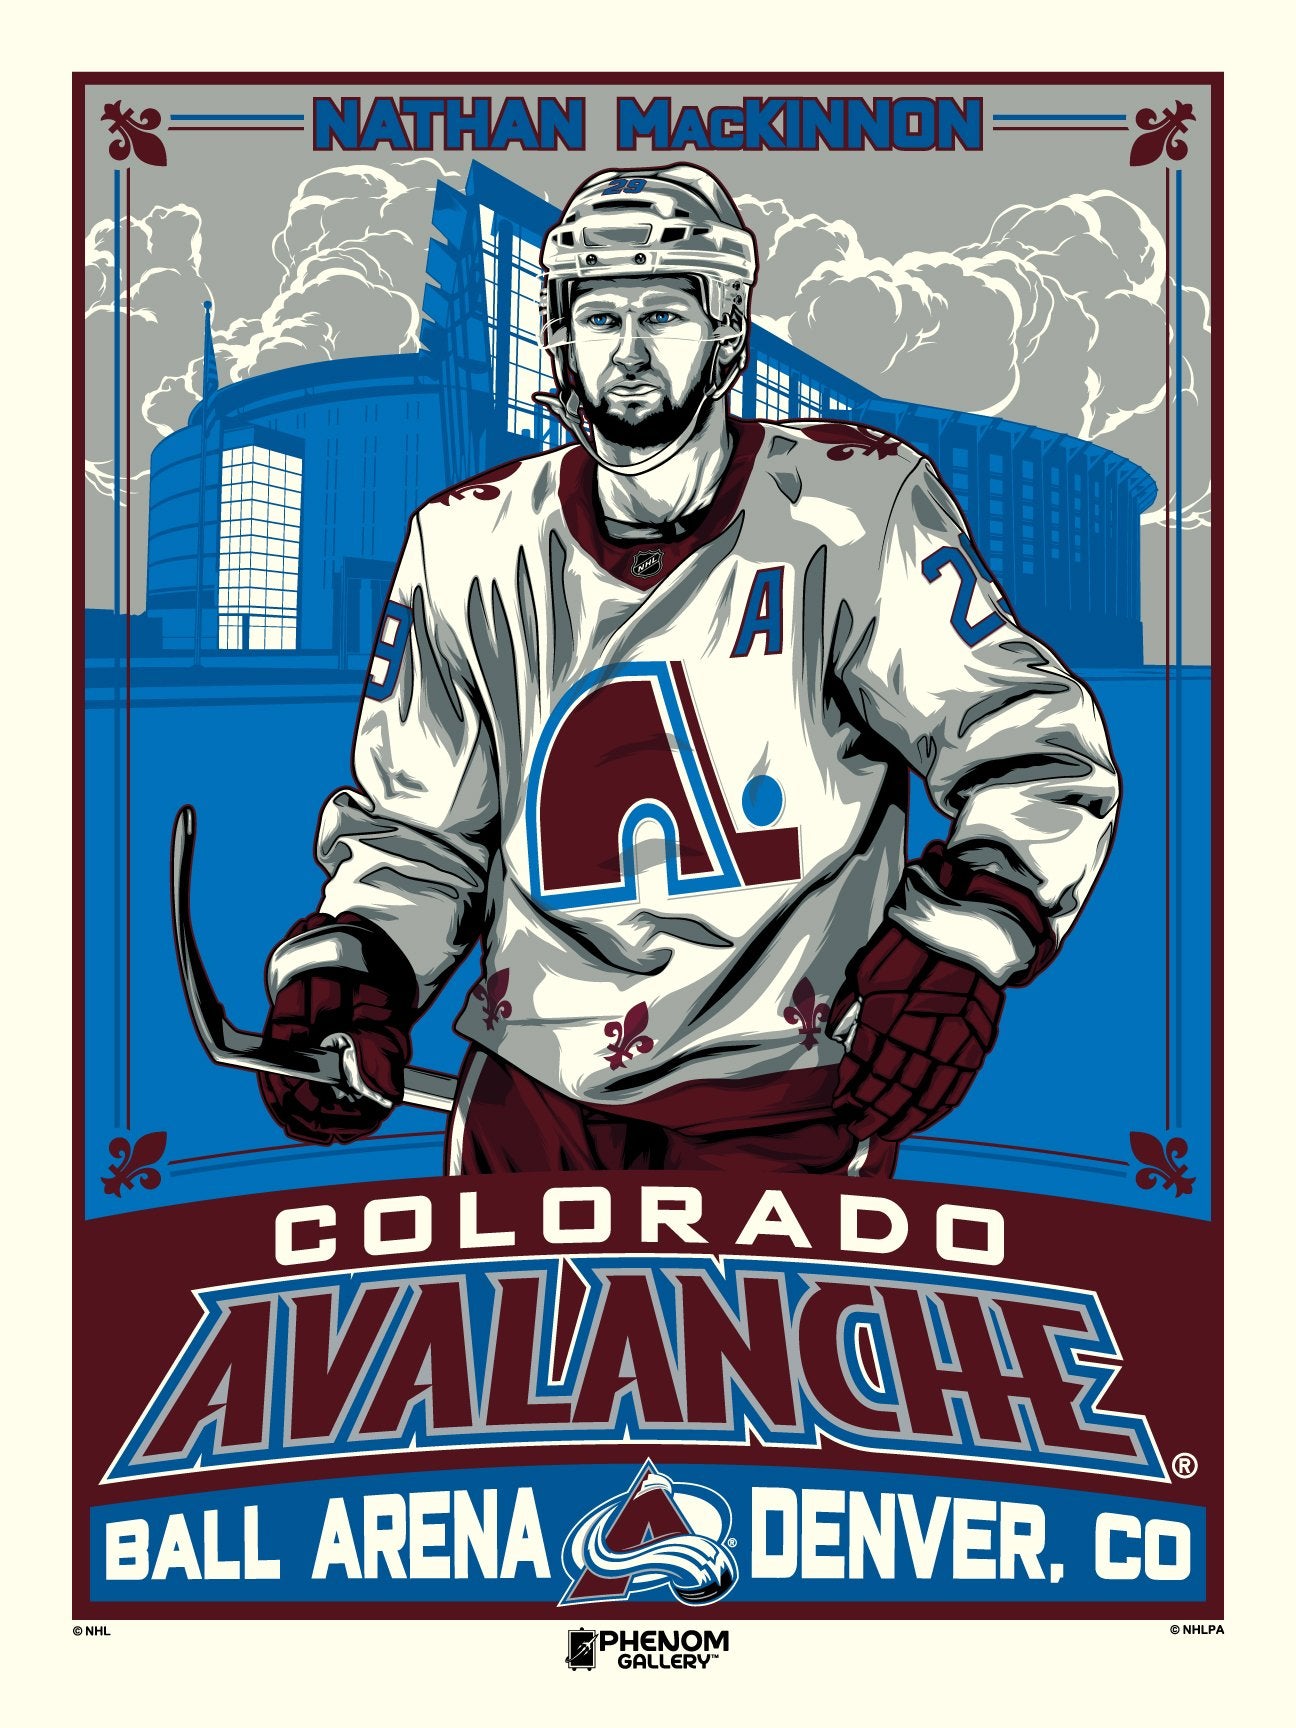 Colorado Avalanche added a new photo. - Colorado Avalanche